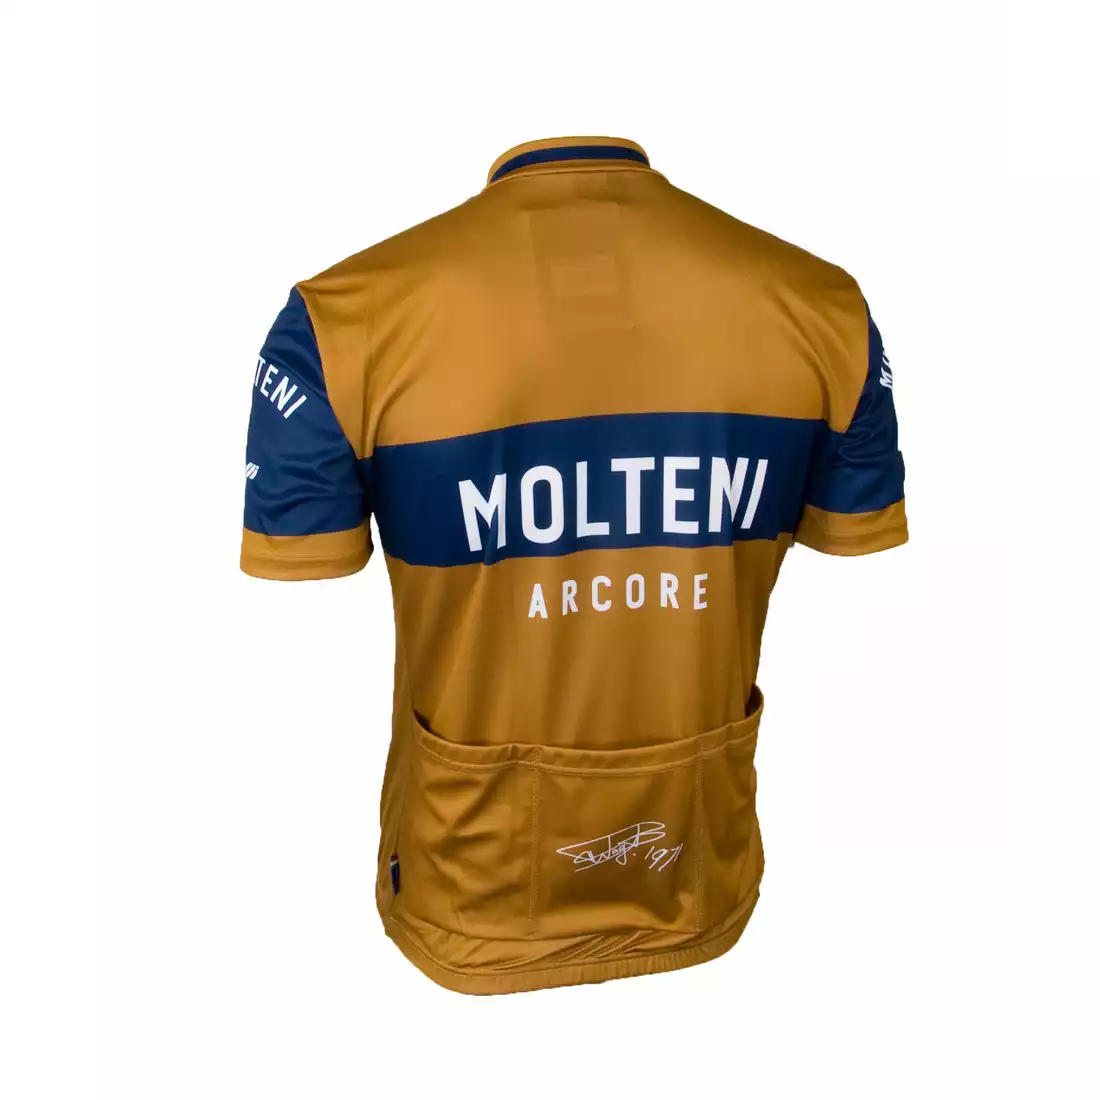 ROGELLI BIKE MOLTENI bicycle jersey 001.218, Colour: Brown